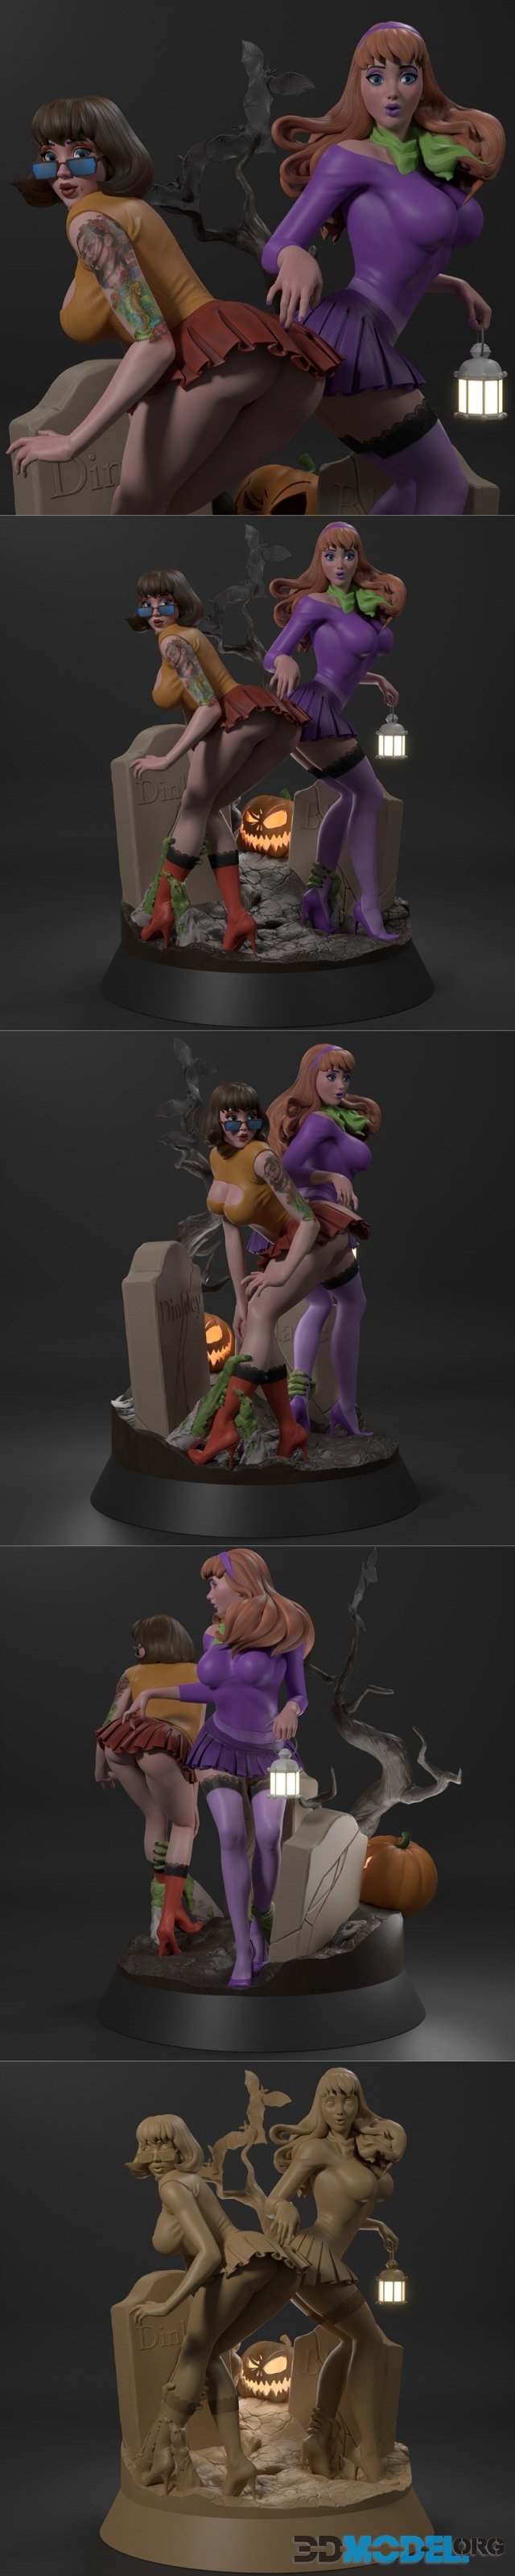 Graveyard Daphne and Velma – Printable